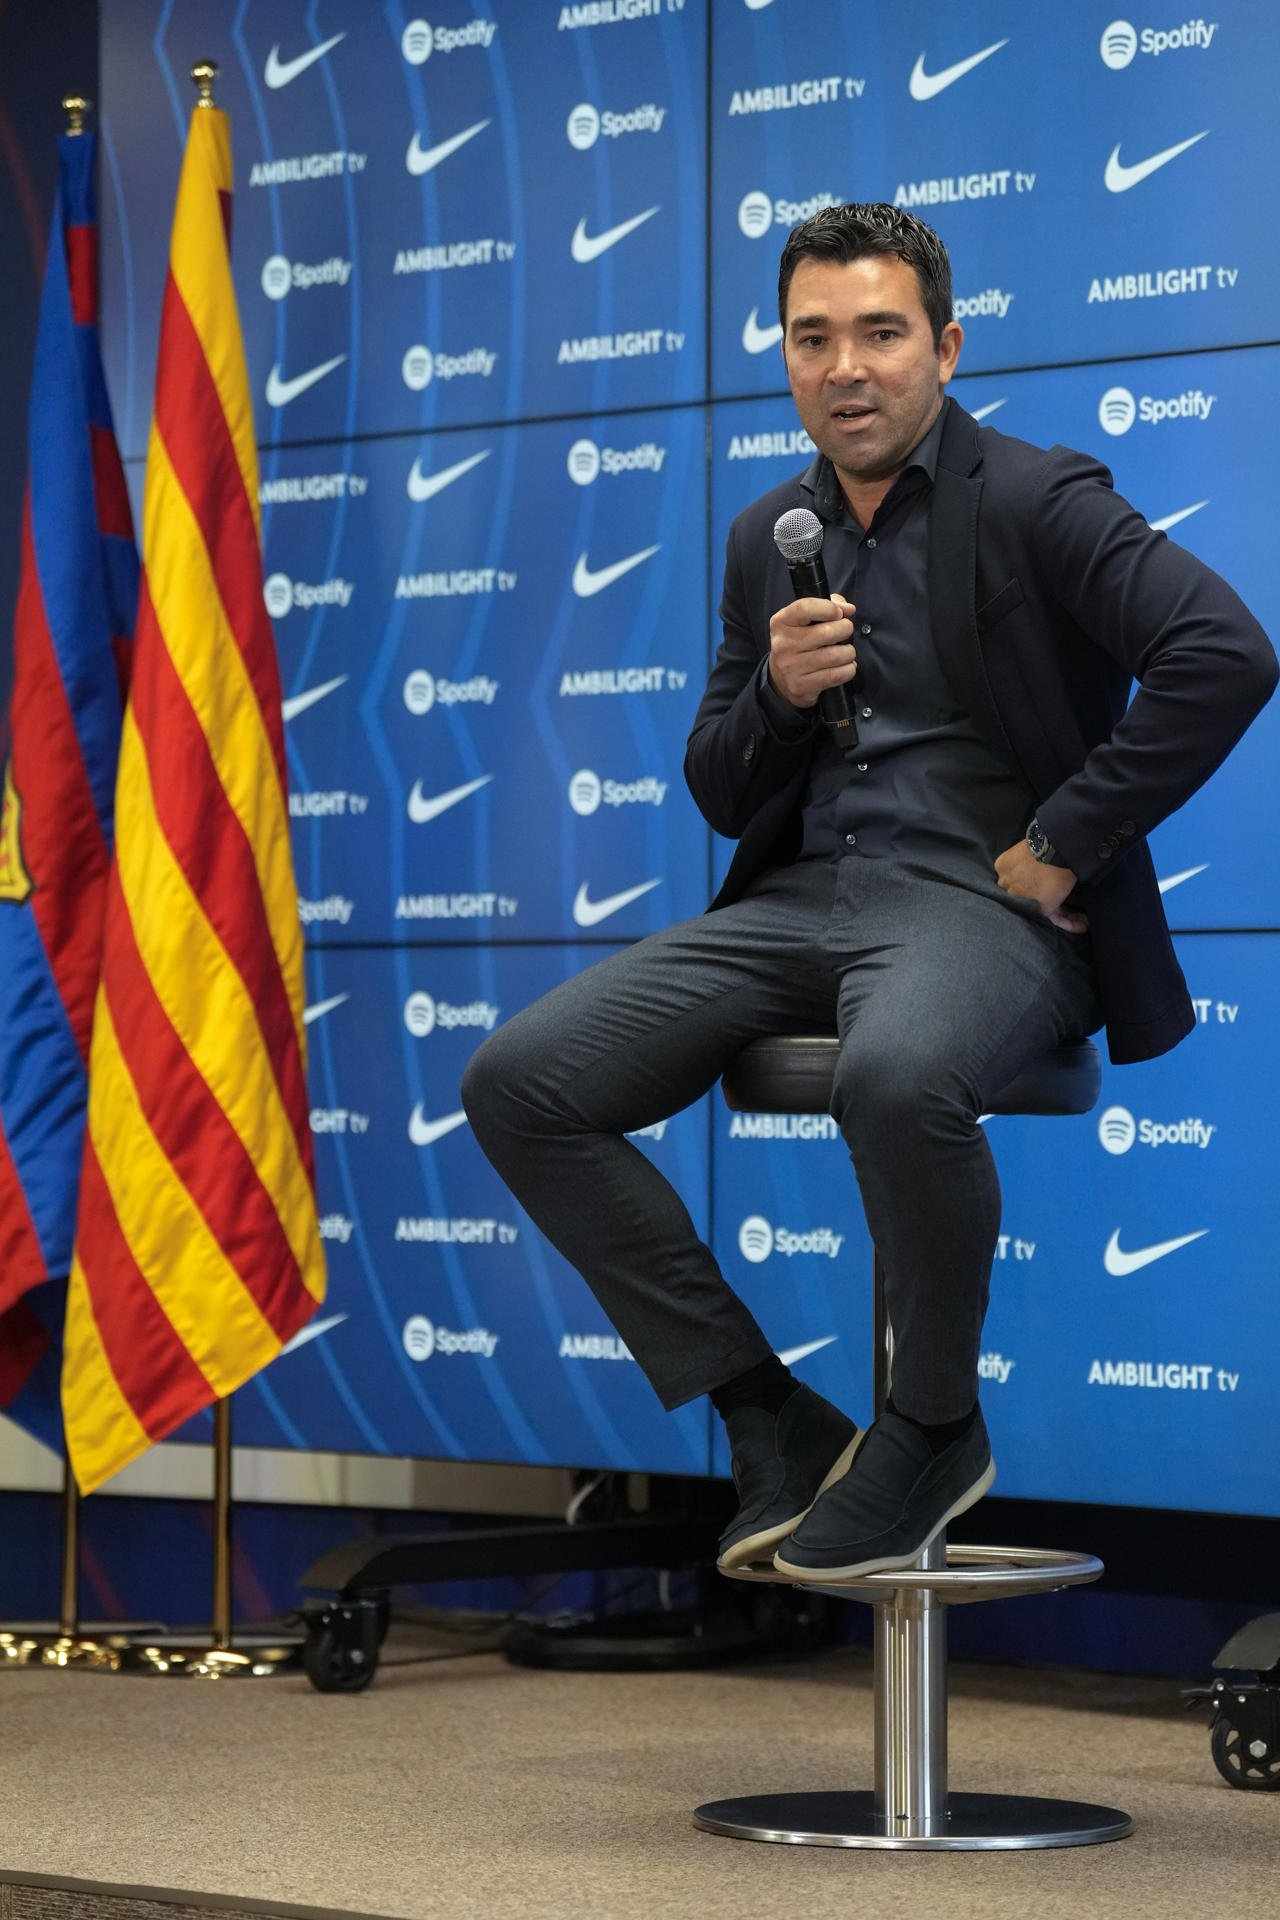 Deco descarta dos candidats per substituir Xavi Hernández al Barça